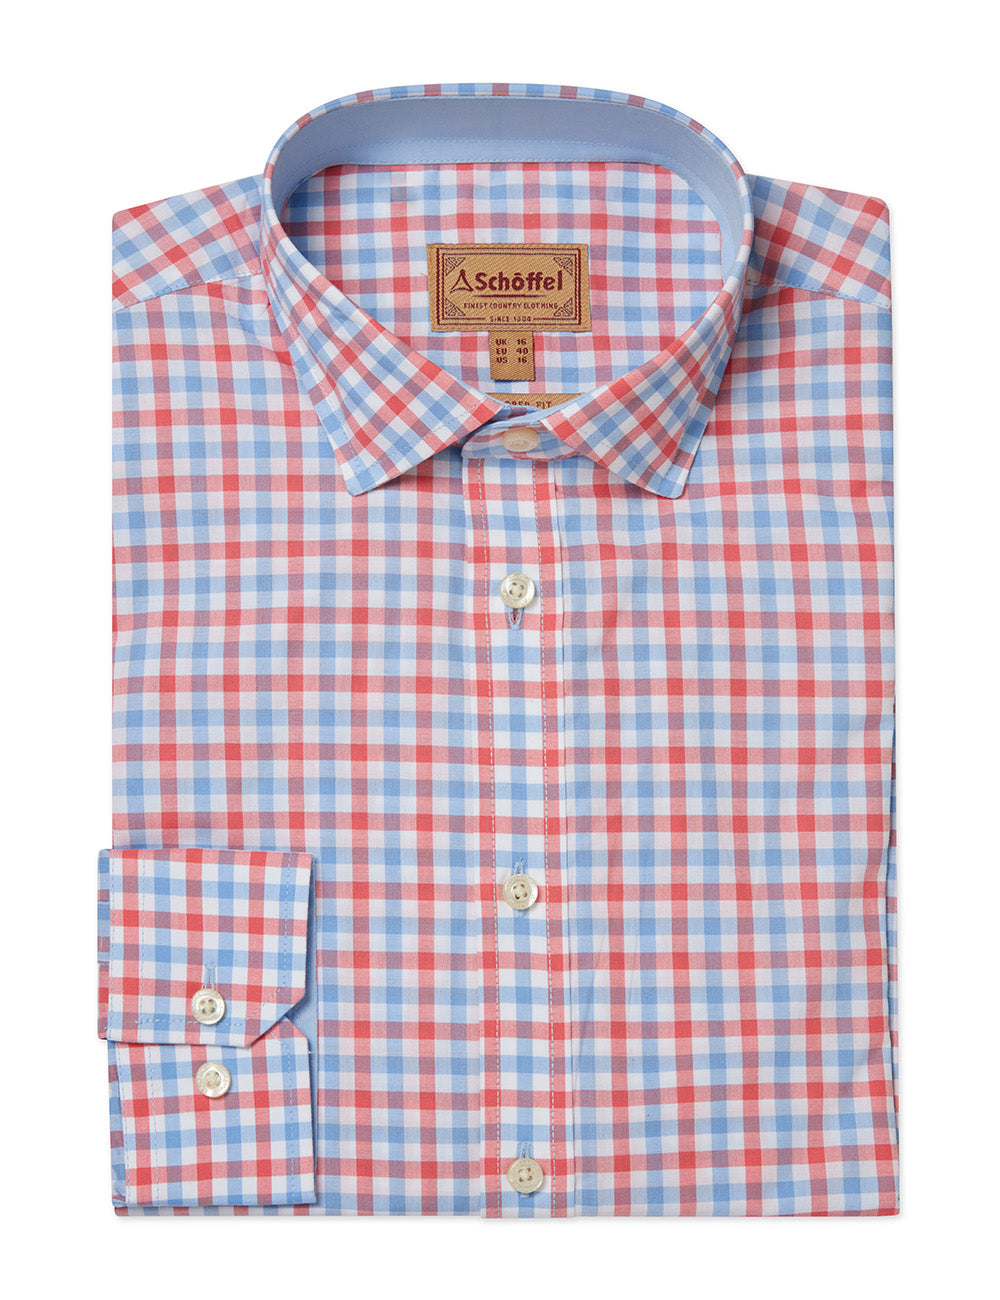 Schoffel Hebden Tailored Shirt - Sun Coral/Sky Blue Check